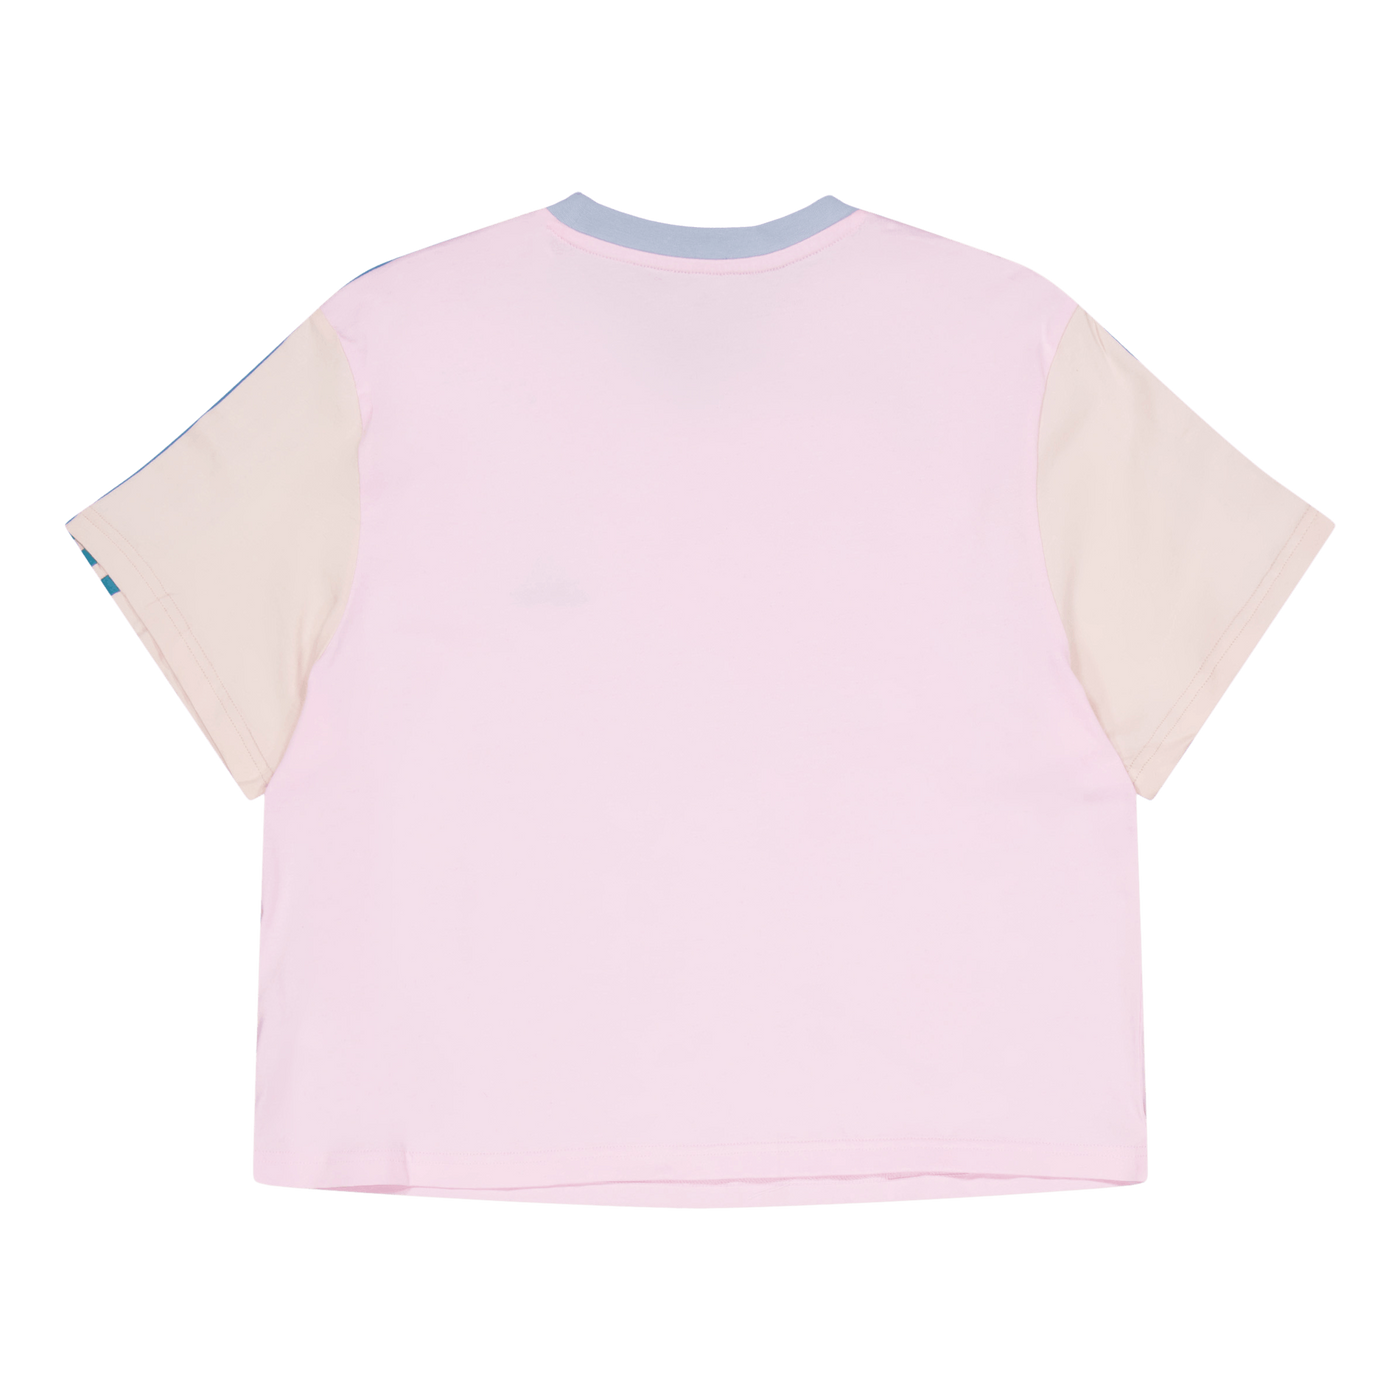 Essentials 3-Stripes Single Jersey Crop Top Clear Pink